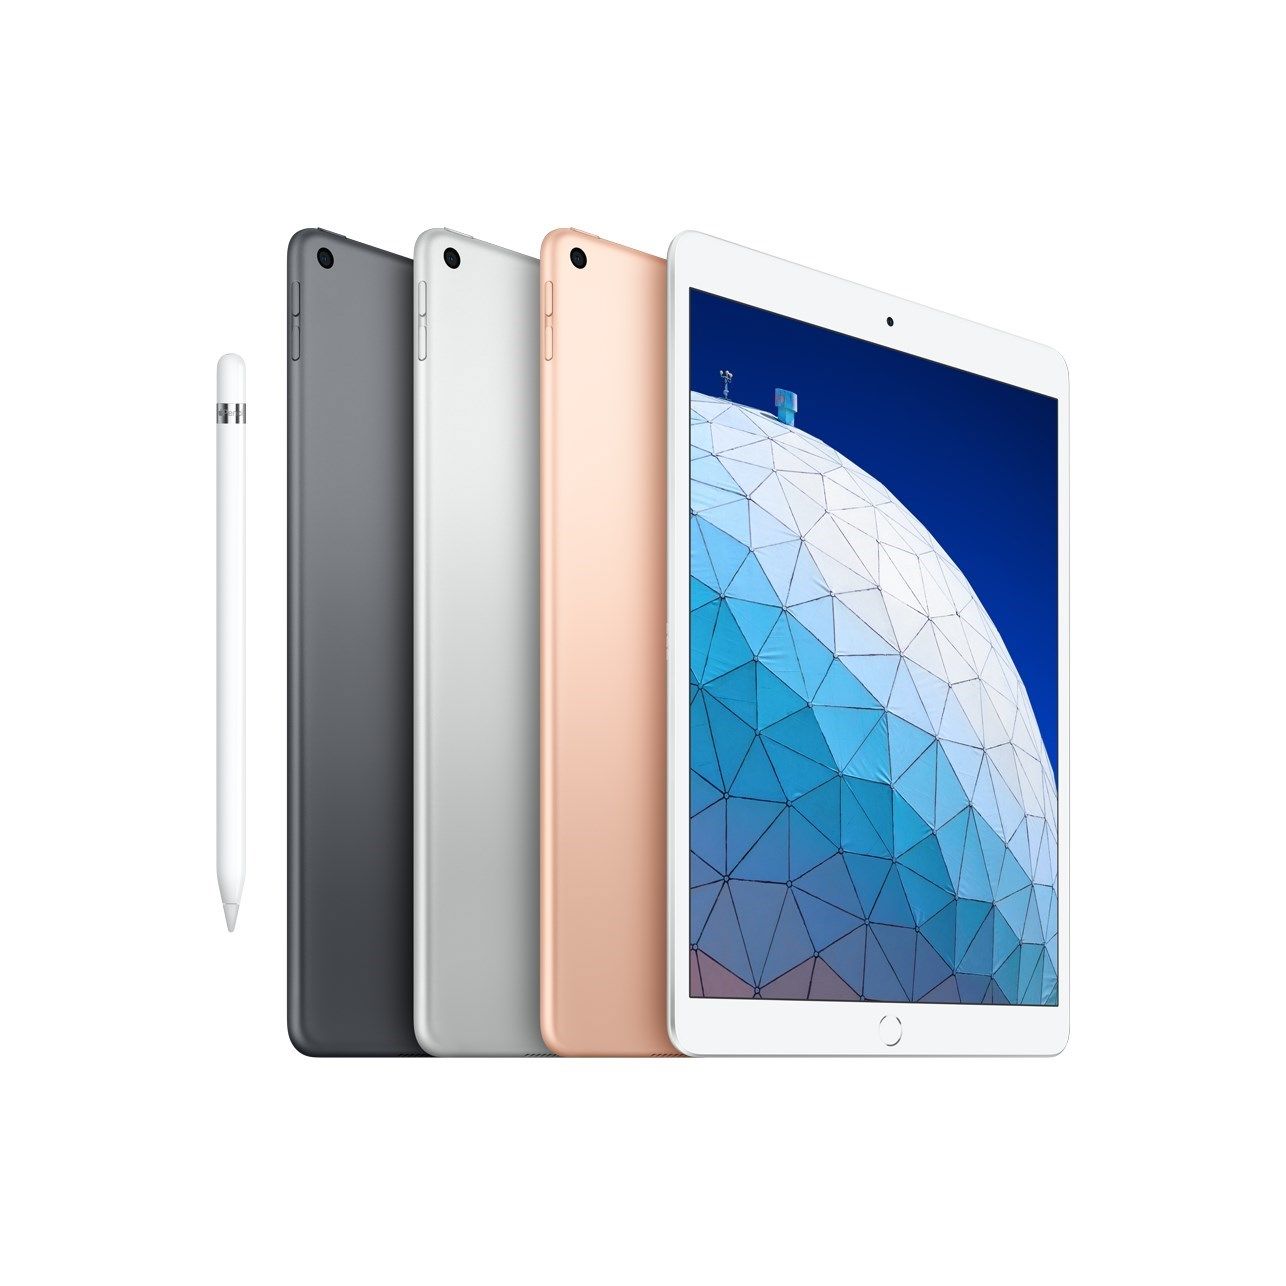 The New and Latest iPad Air (2019) 10.5" Retina Display 